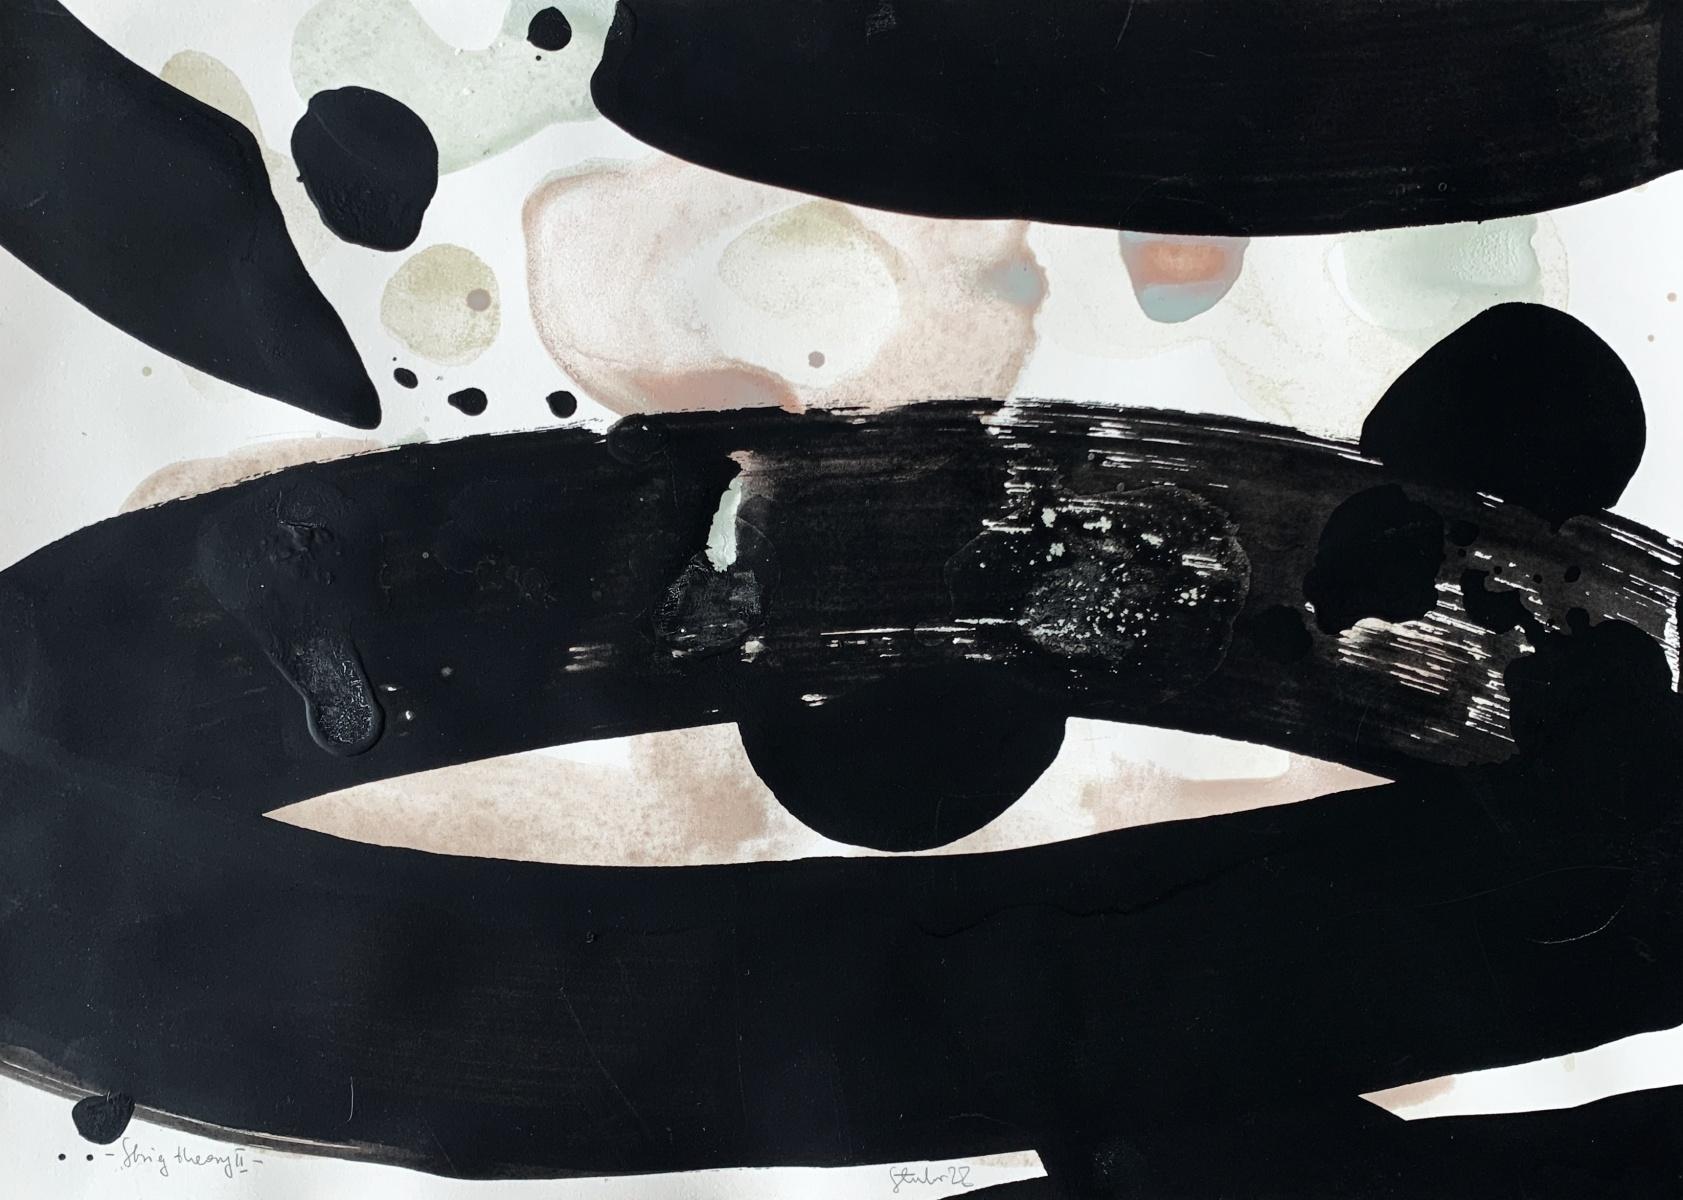 théorie des cordes 2 - Abstraction, Acrylique sur papier, Cosmos, artiste polonais